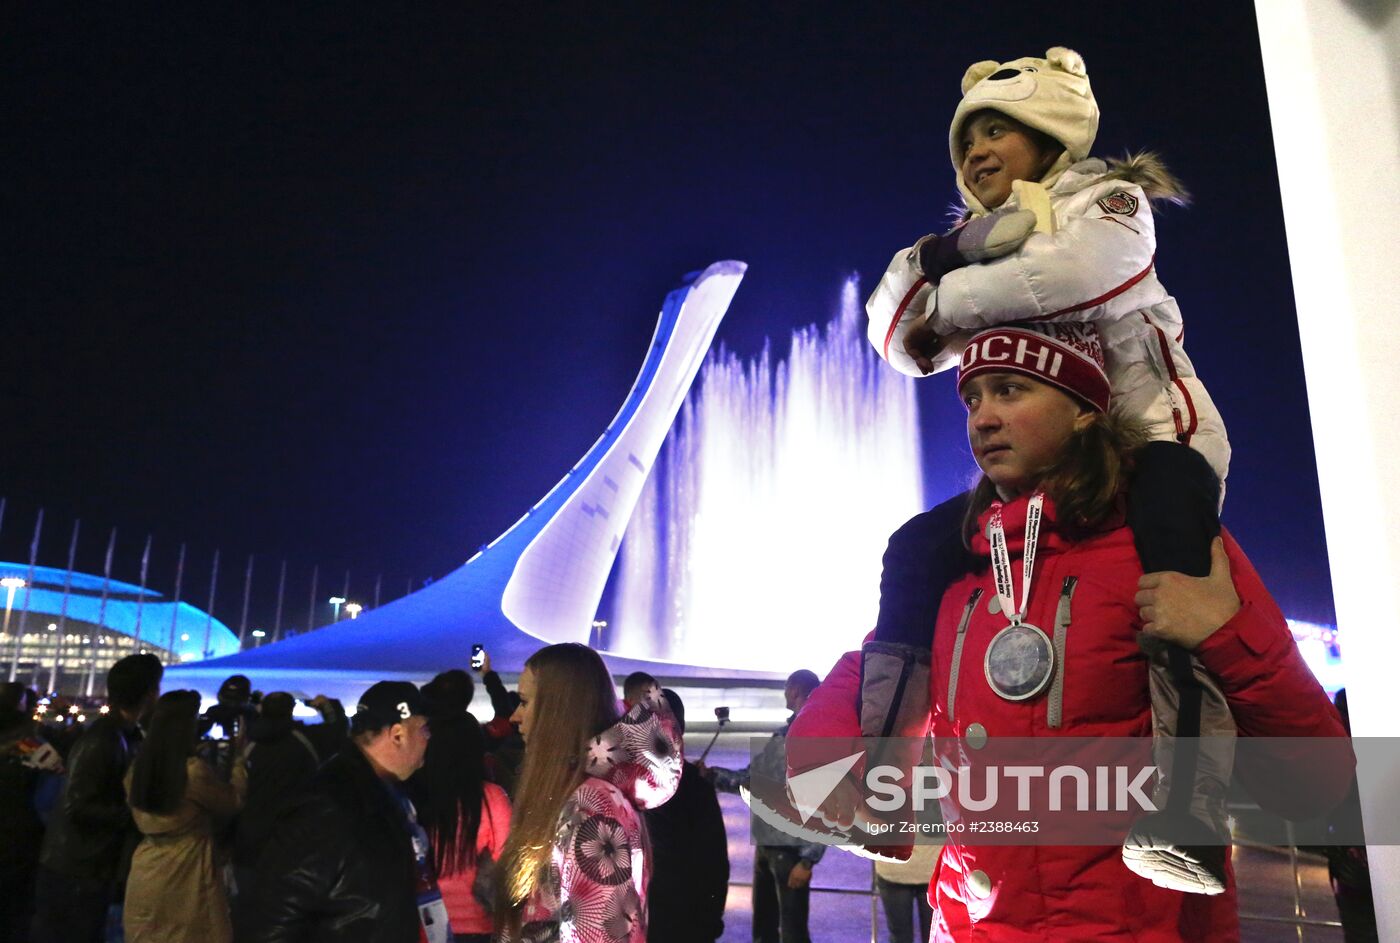 Sochi bids farewell to XXII Olympic Winter Games